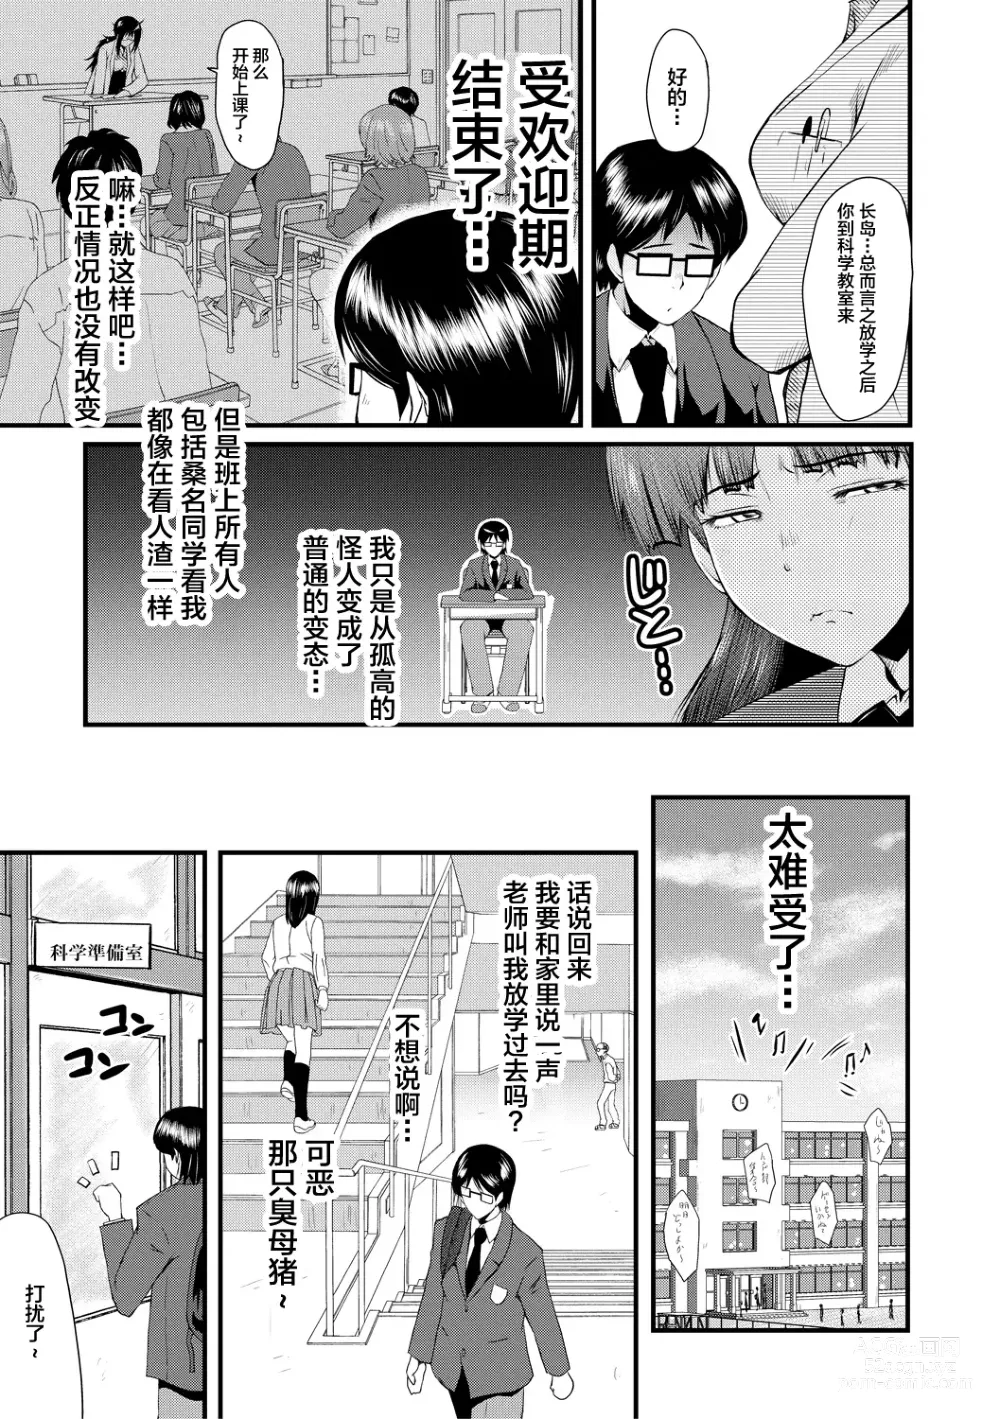 Page 17 of manga Sennou Kikan